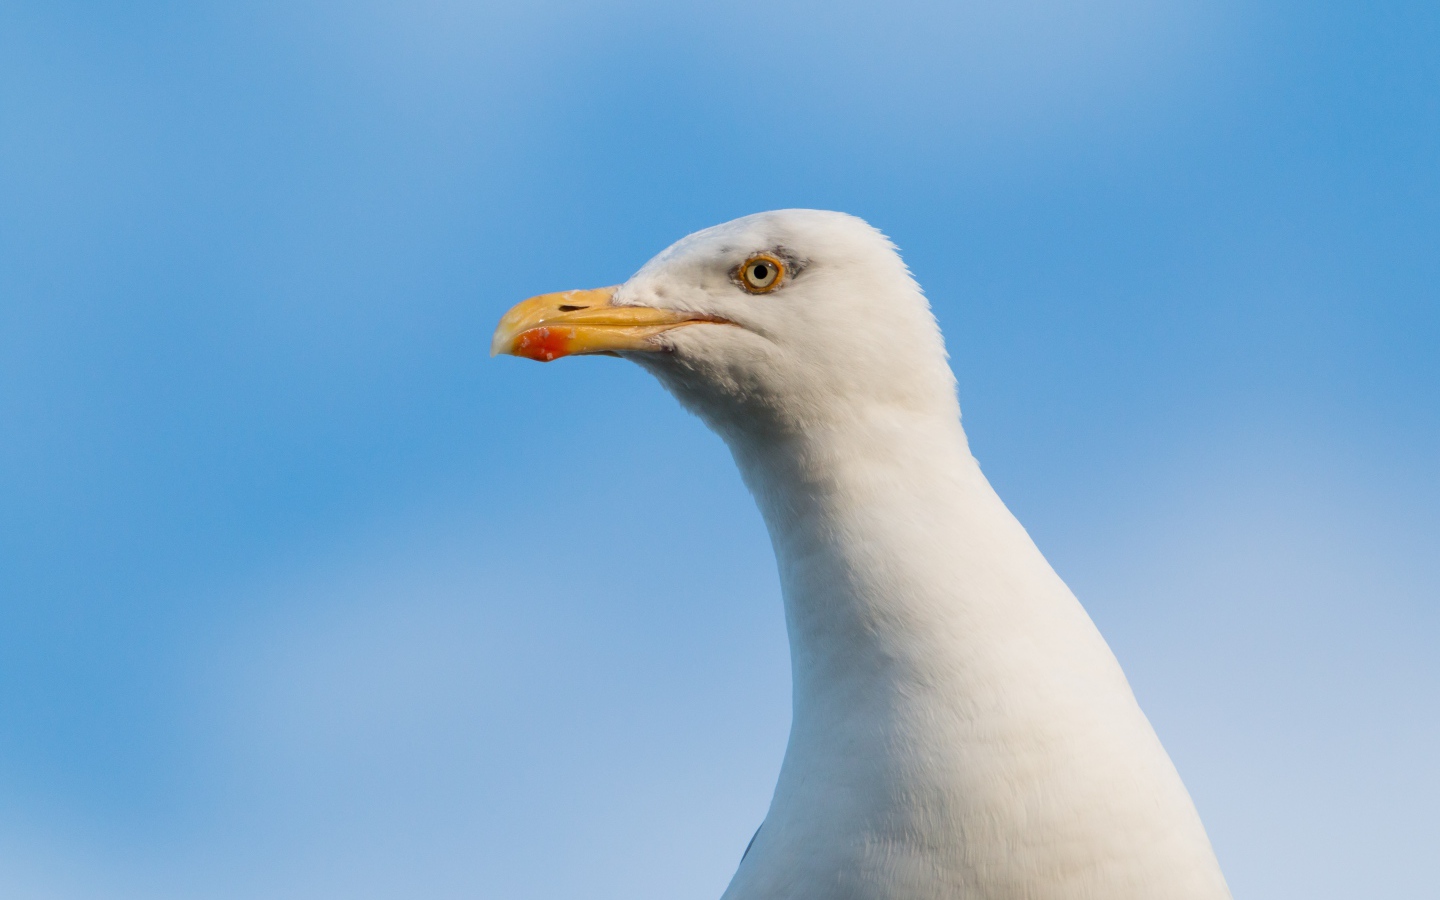 Ivory seagull head against blue sky